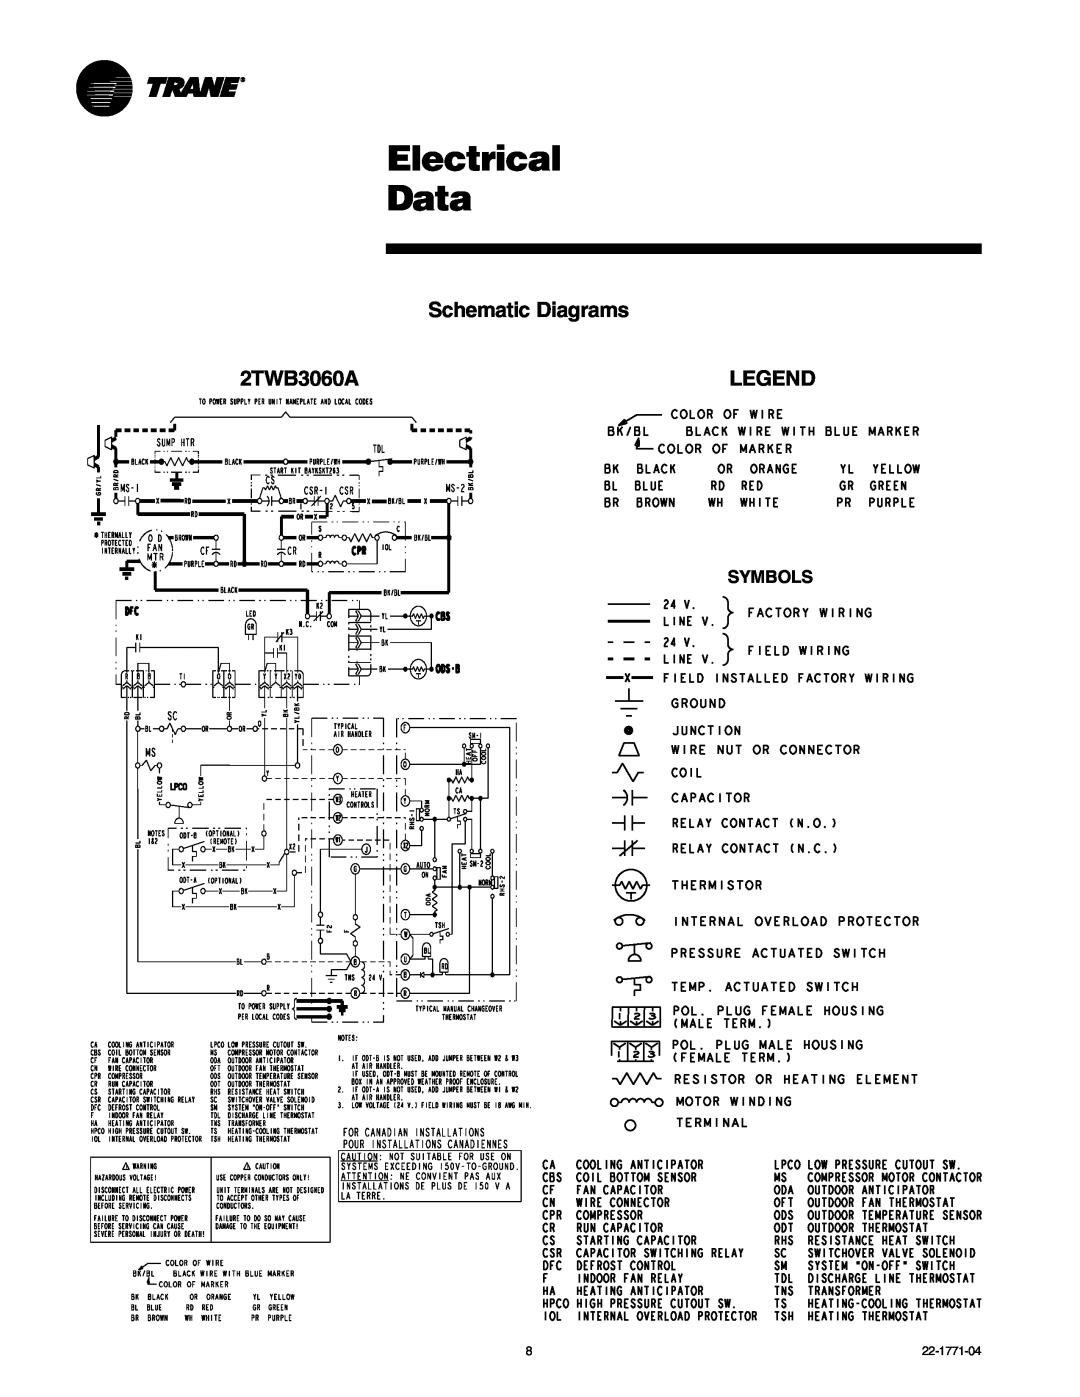 Trane 2TWB3018-060 manual Electrical Data, Schematic Diagrams, 2TWB3060A 